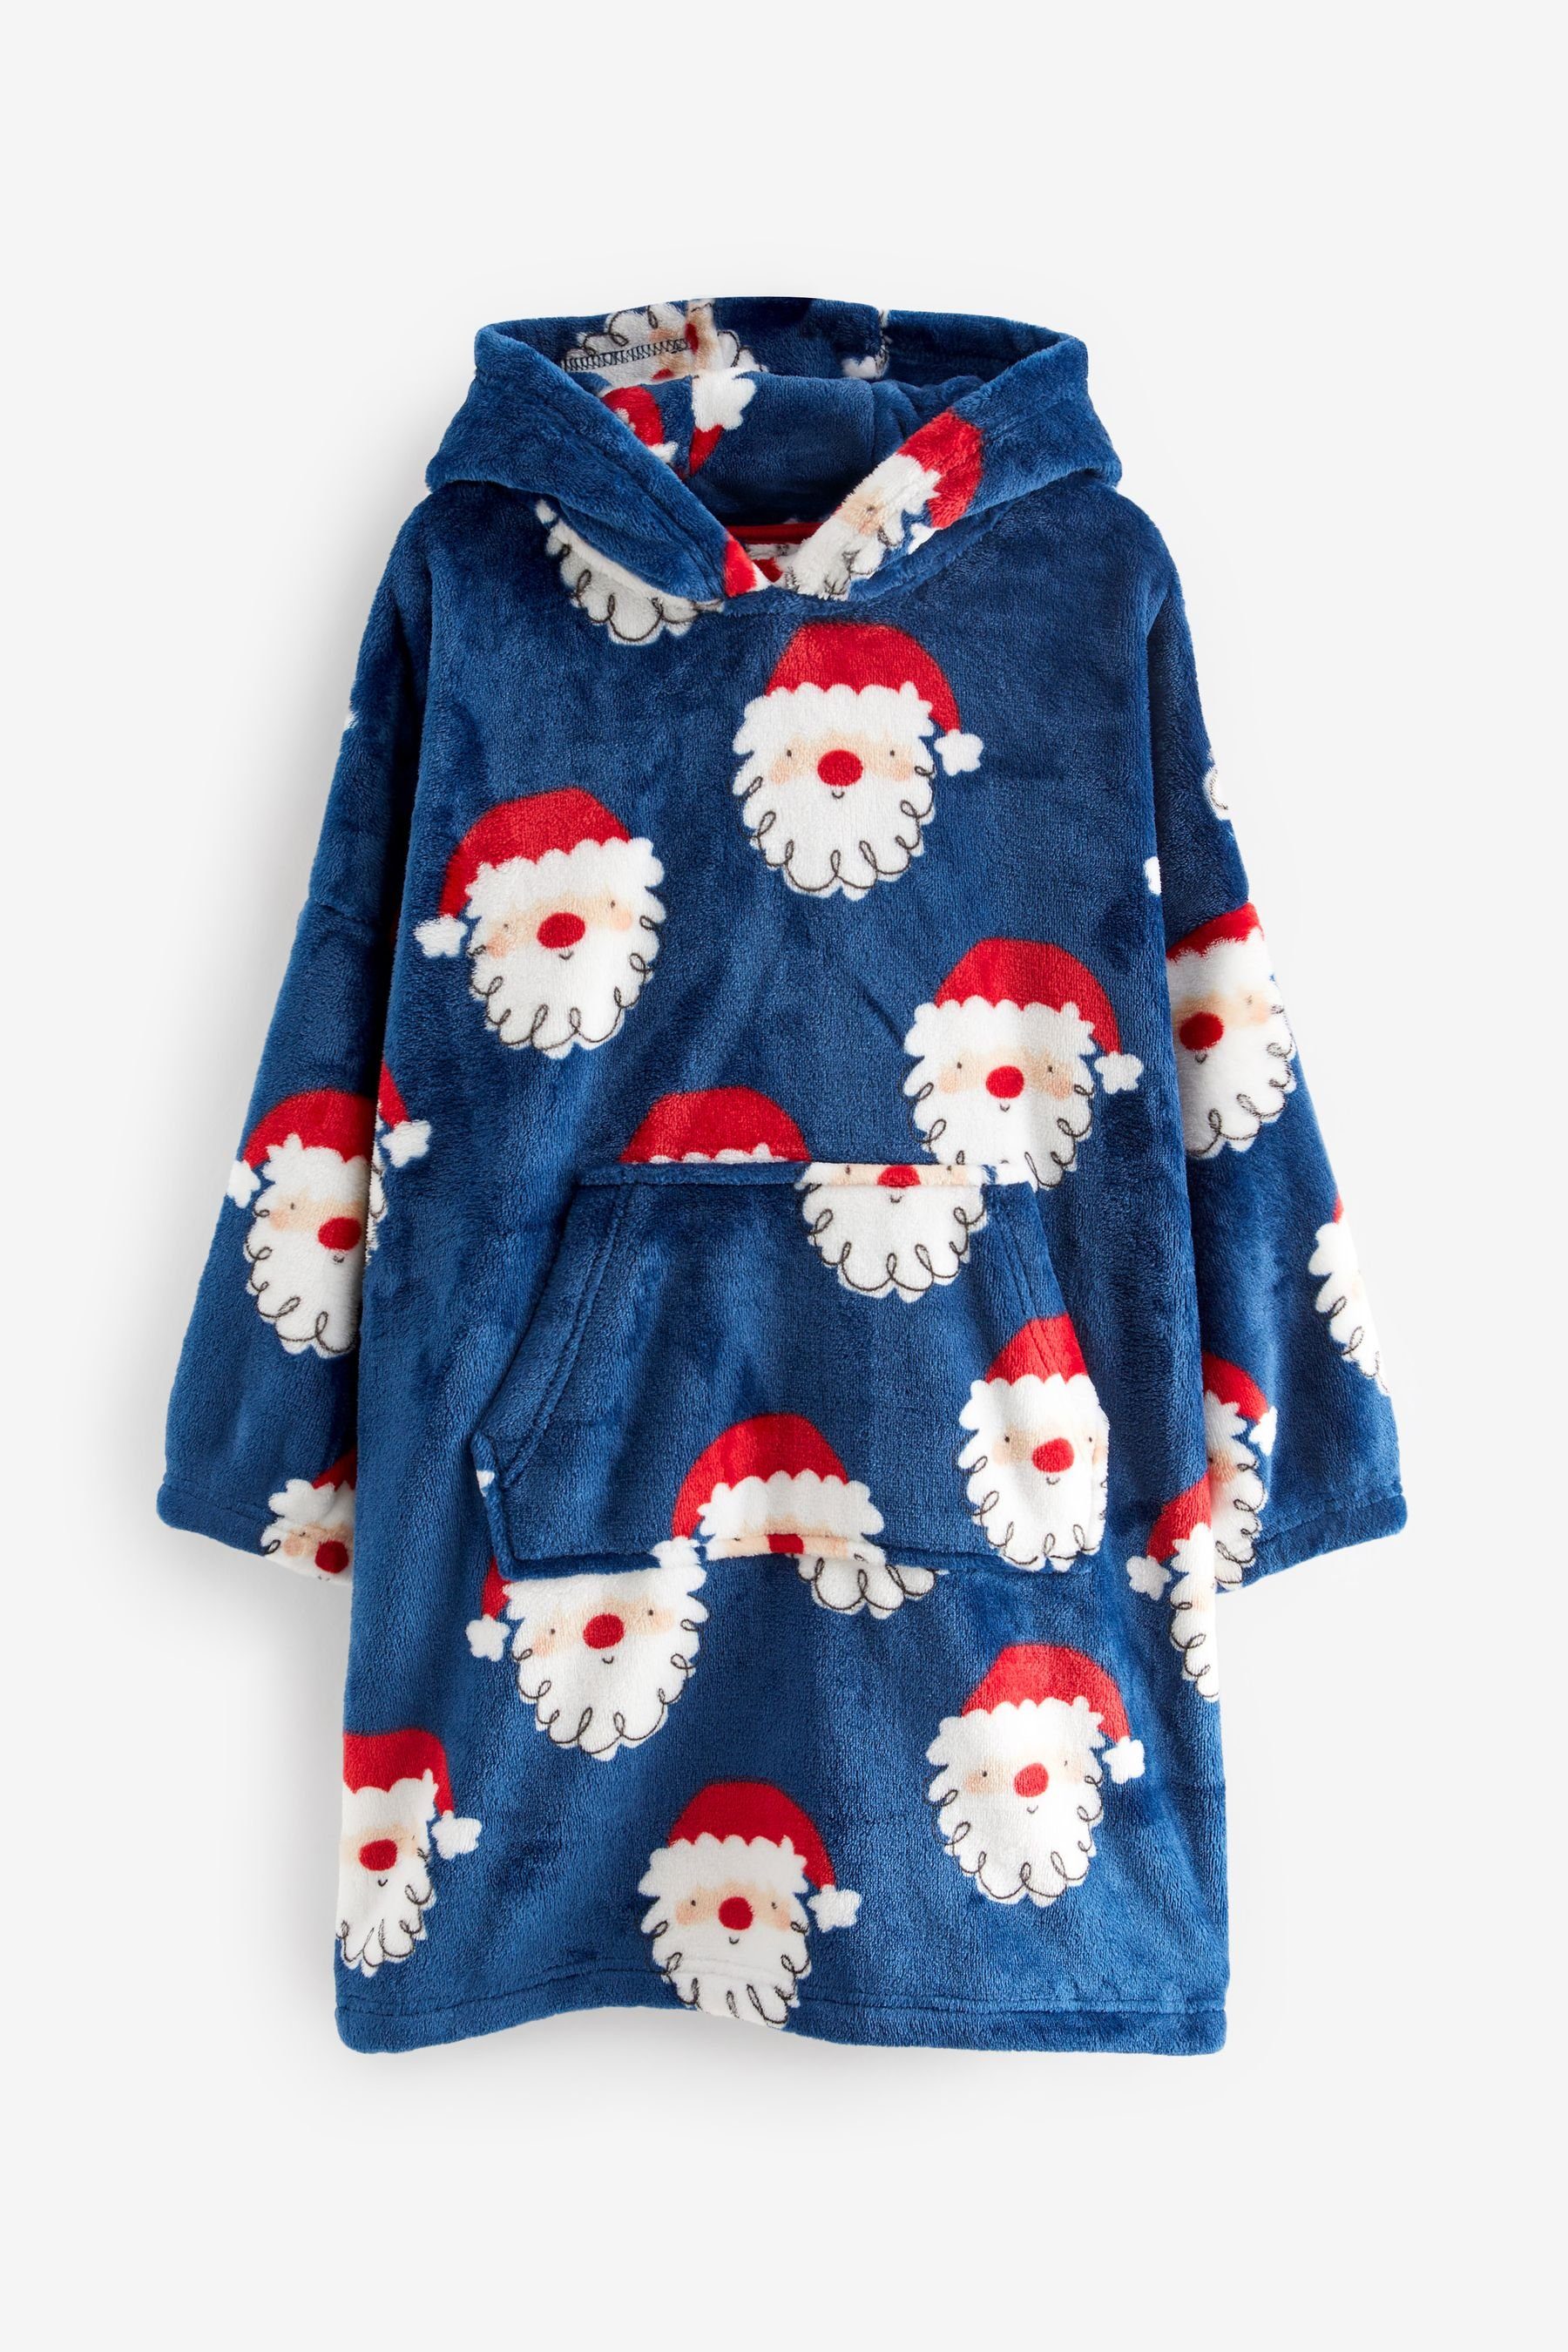 Next Kinderbademantel Decke mit Kapuze, Polyester (recycelt), Polyester Navy Blue/Red Santa